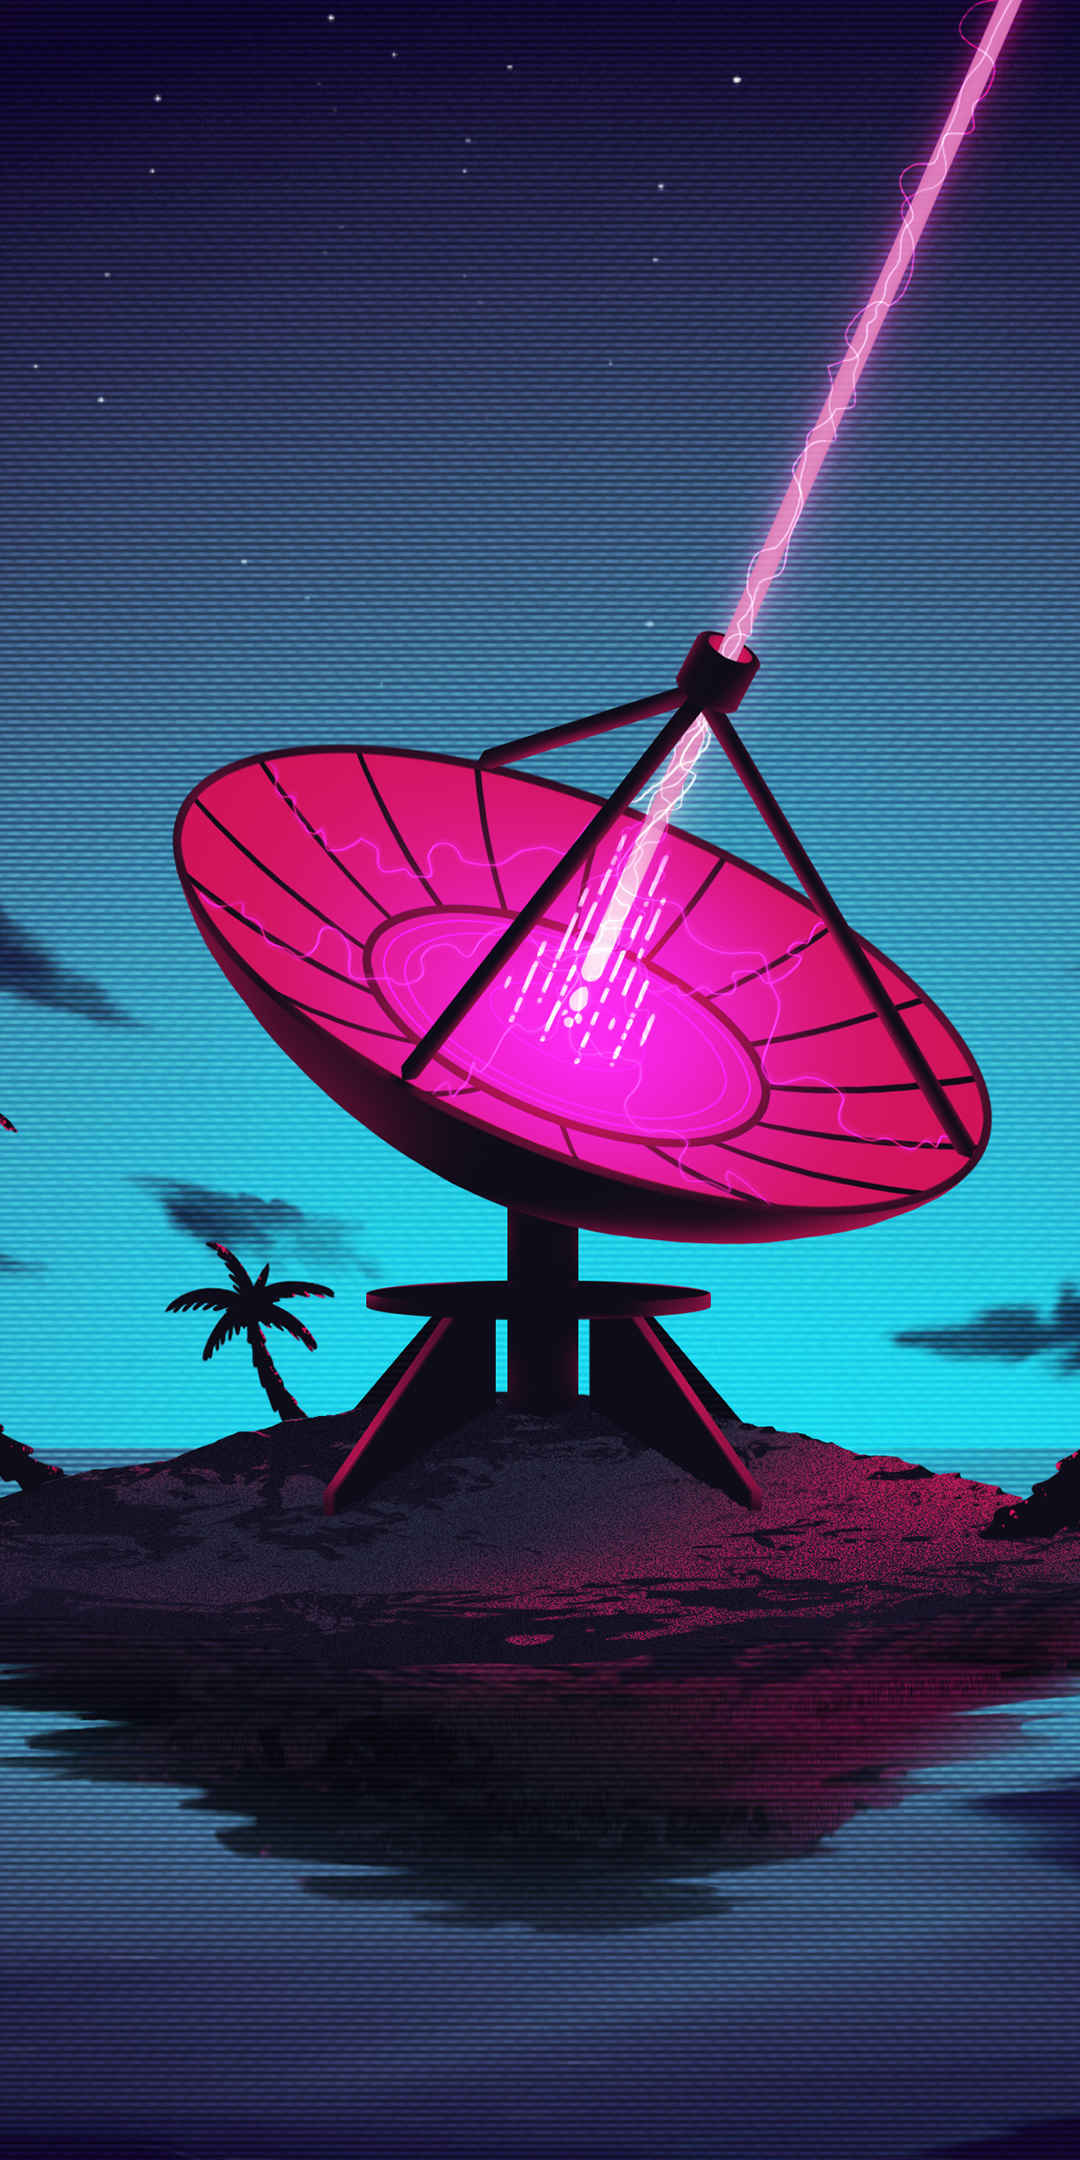 Antenna, island, dark, digital art, 1080x2160 wallpaper